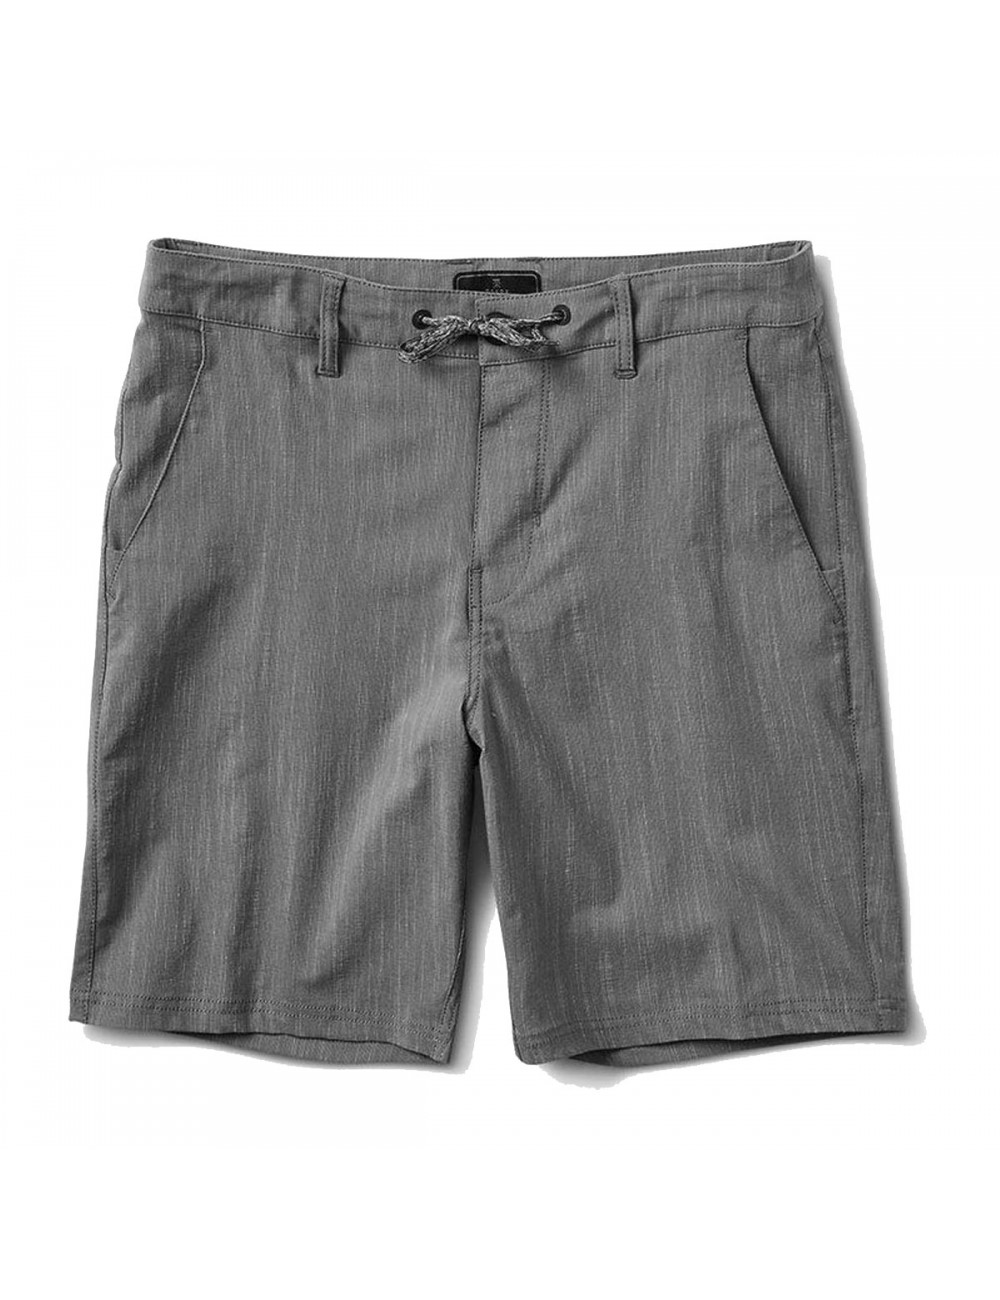 Roark Explorer Amphibious Shorts - grey